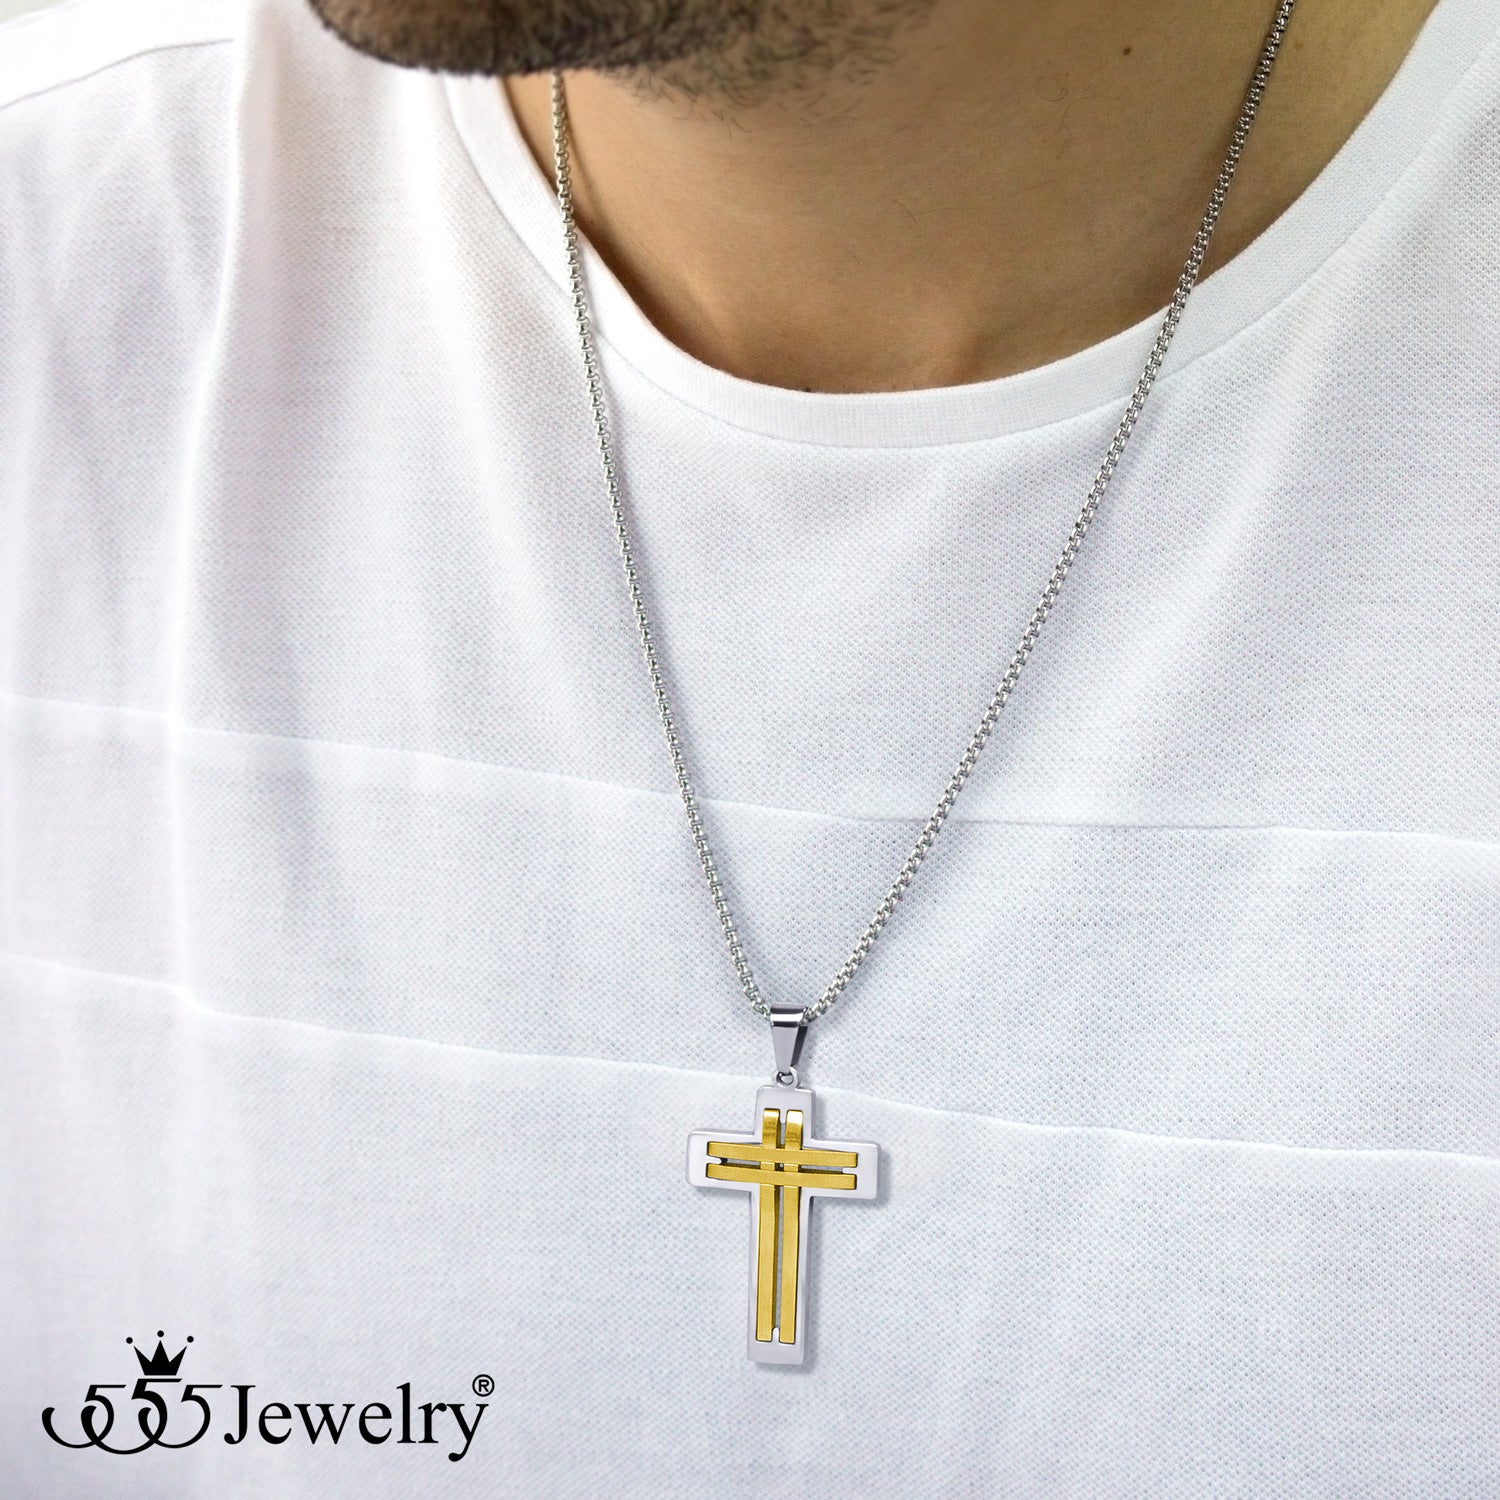 Men's Gold Cross Necklace -Christmas gift - Gifts for Men - Gold Cross Chain  | eBay